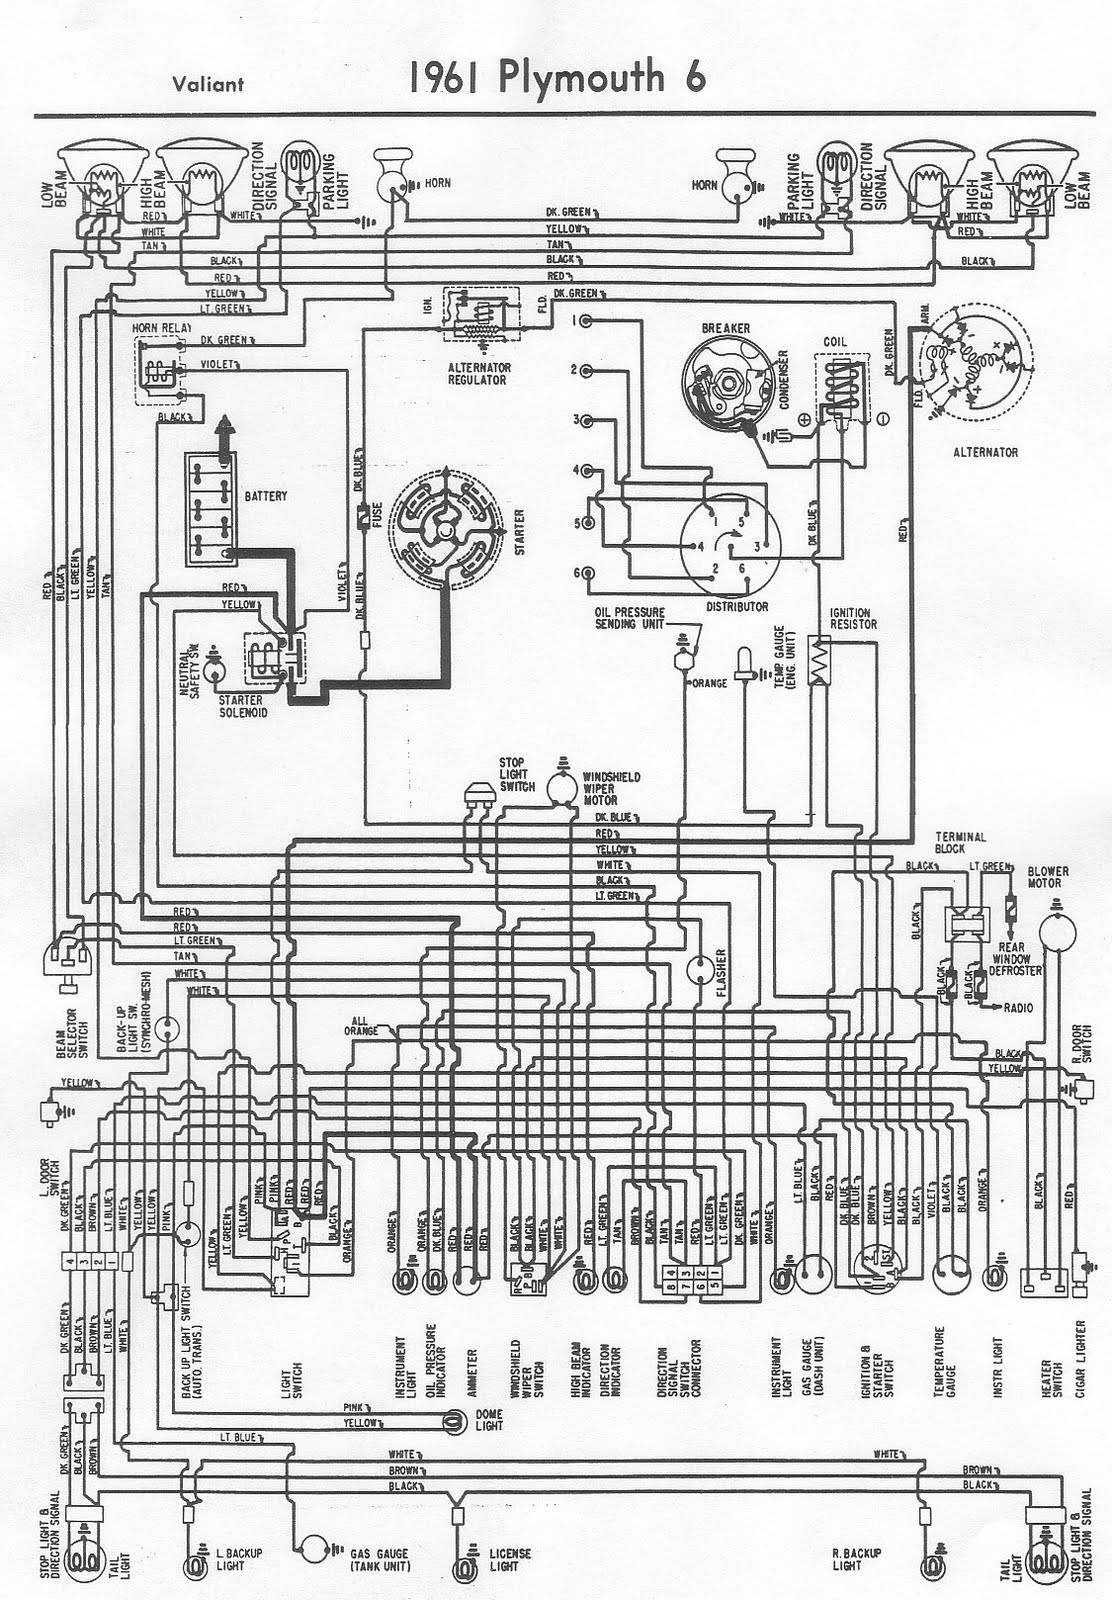 Car Diagrams 1961 Cadillac Wiring Diagram 1967 Plymouth